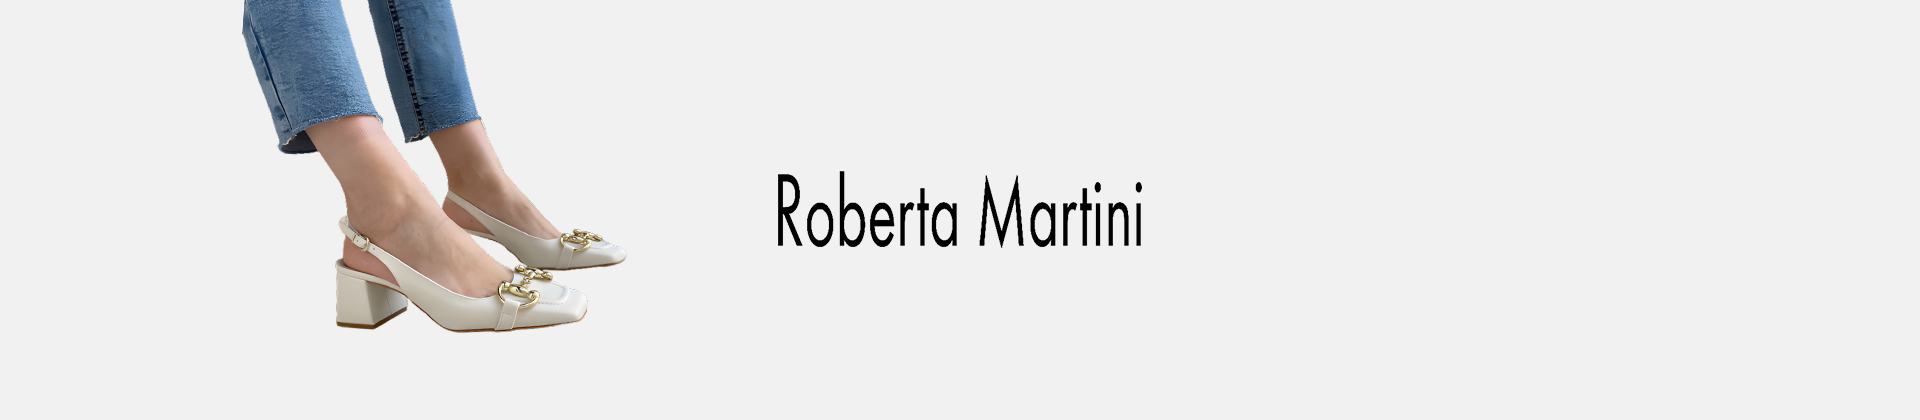 Roberta Martini new collection